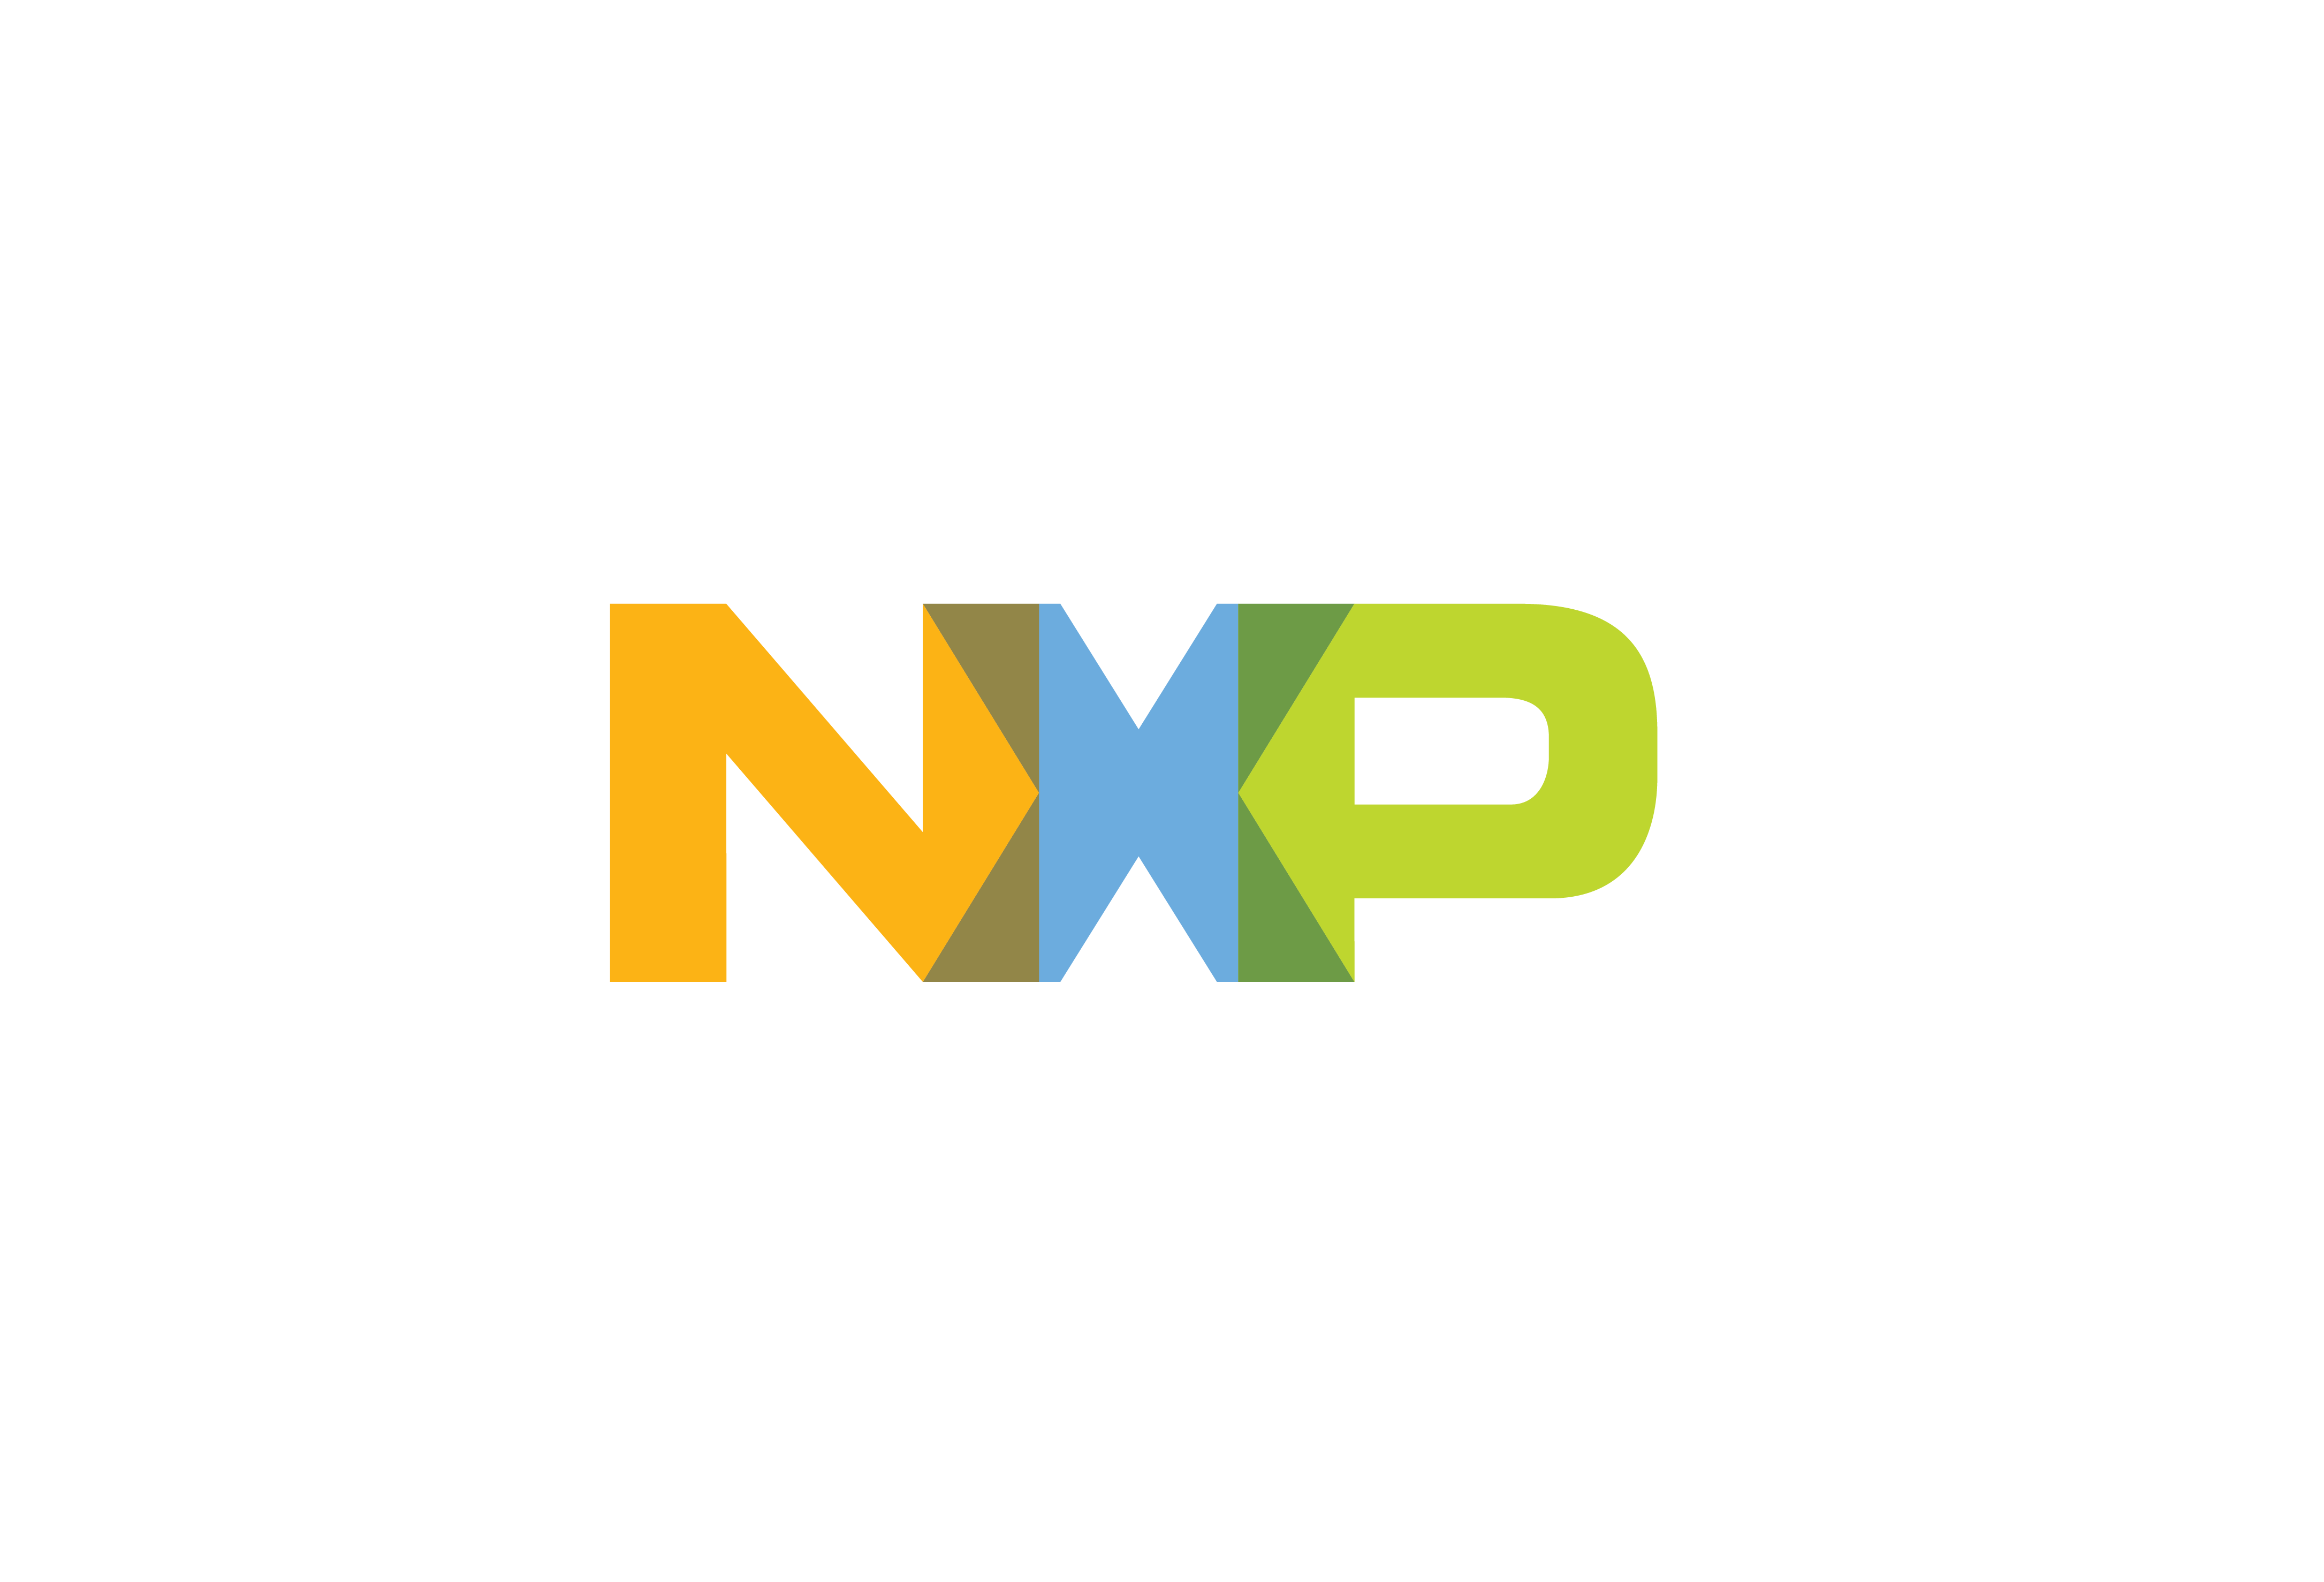 NXP Semiconductors, Inc